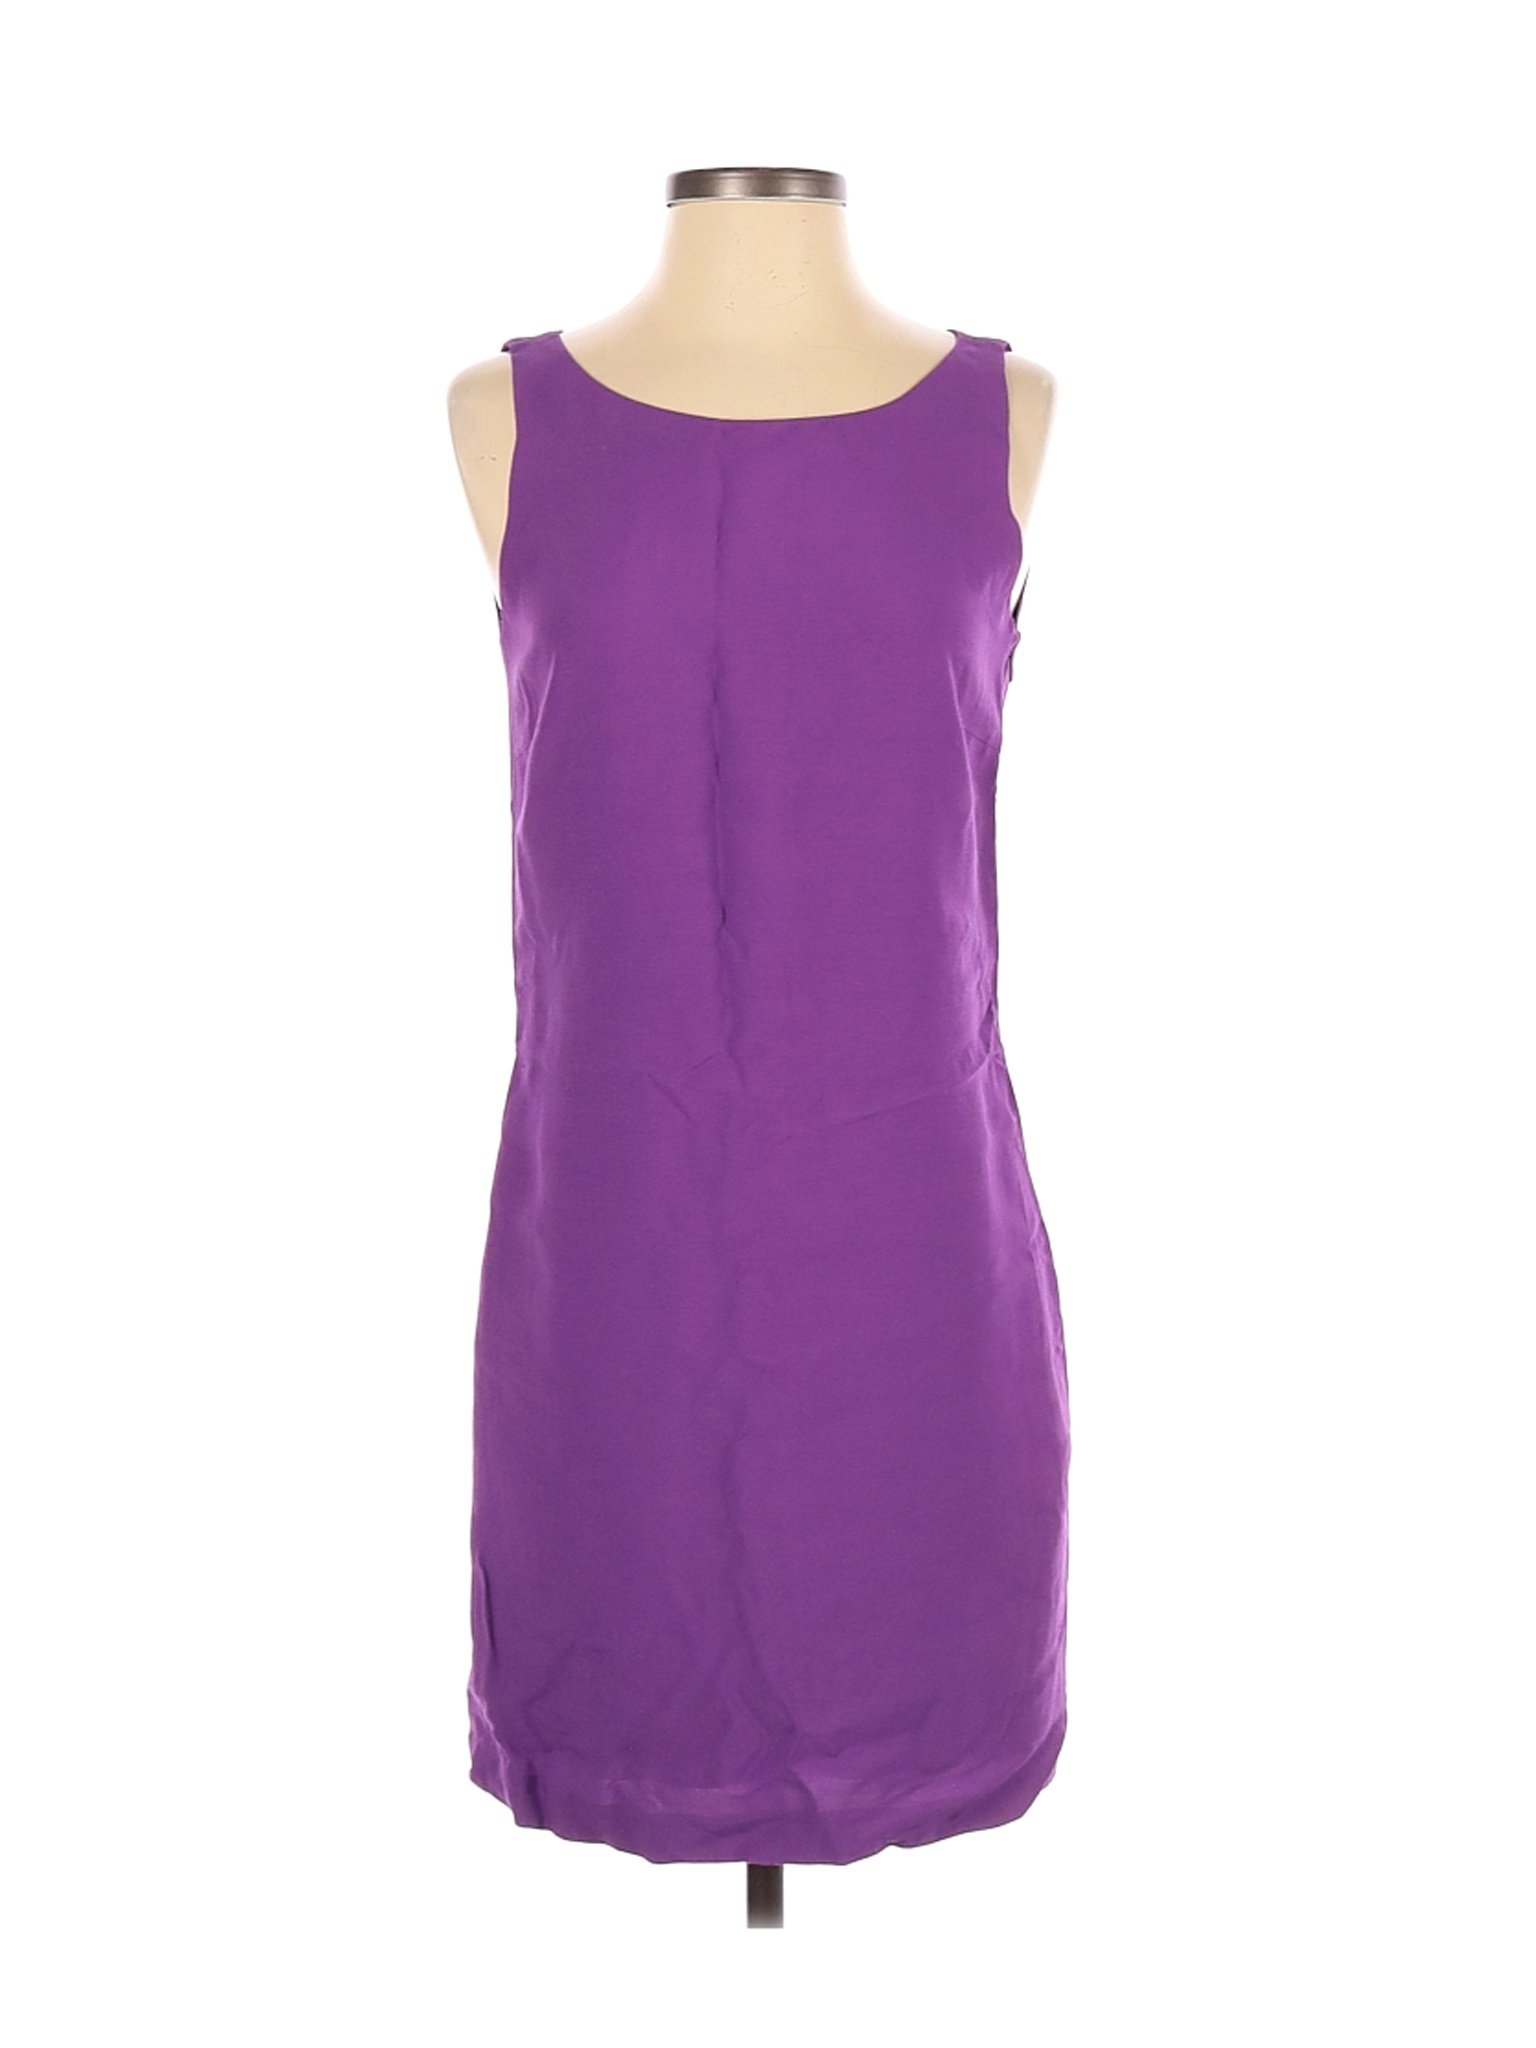 Zara Basic Women Purple Casual Dress XS | eBay